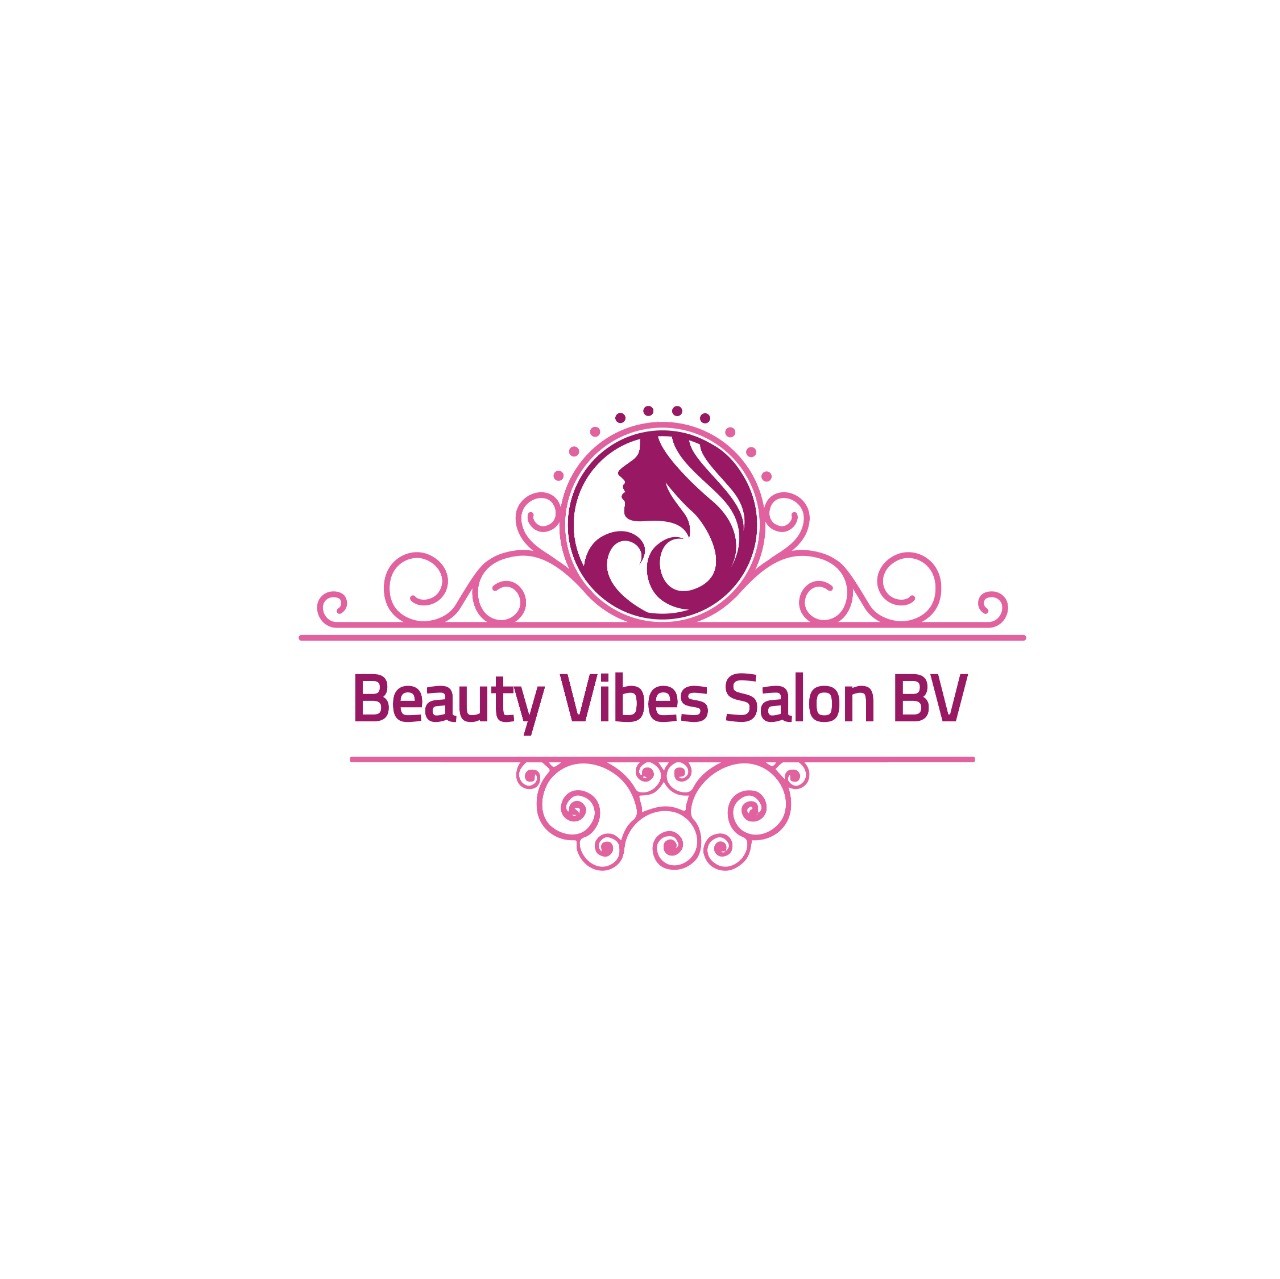 Beauty Vibes Salon BV